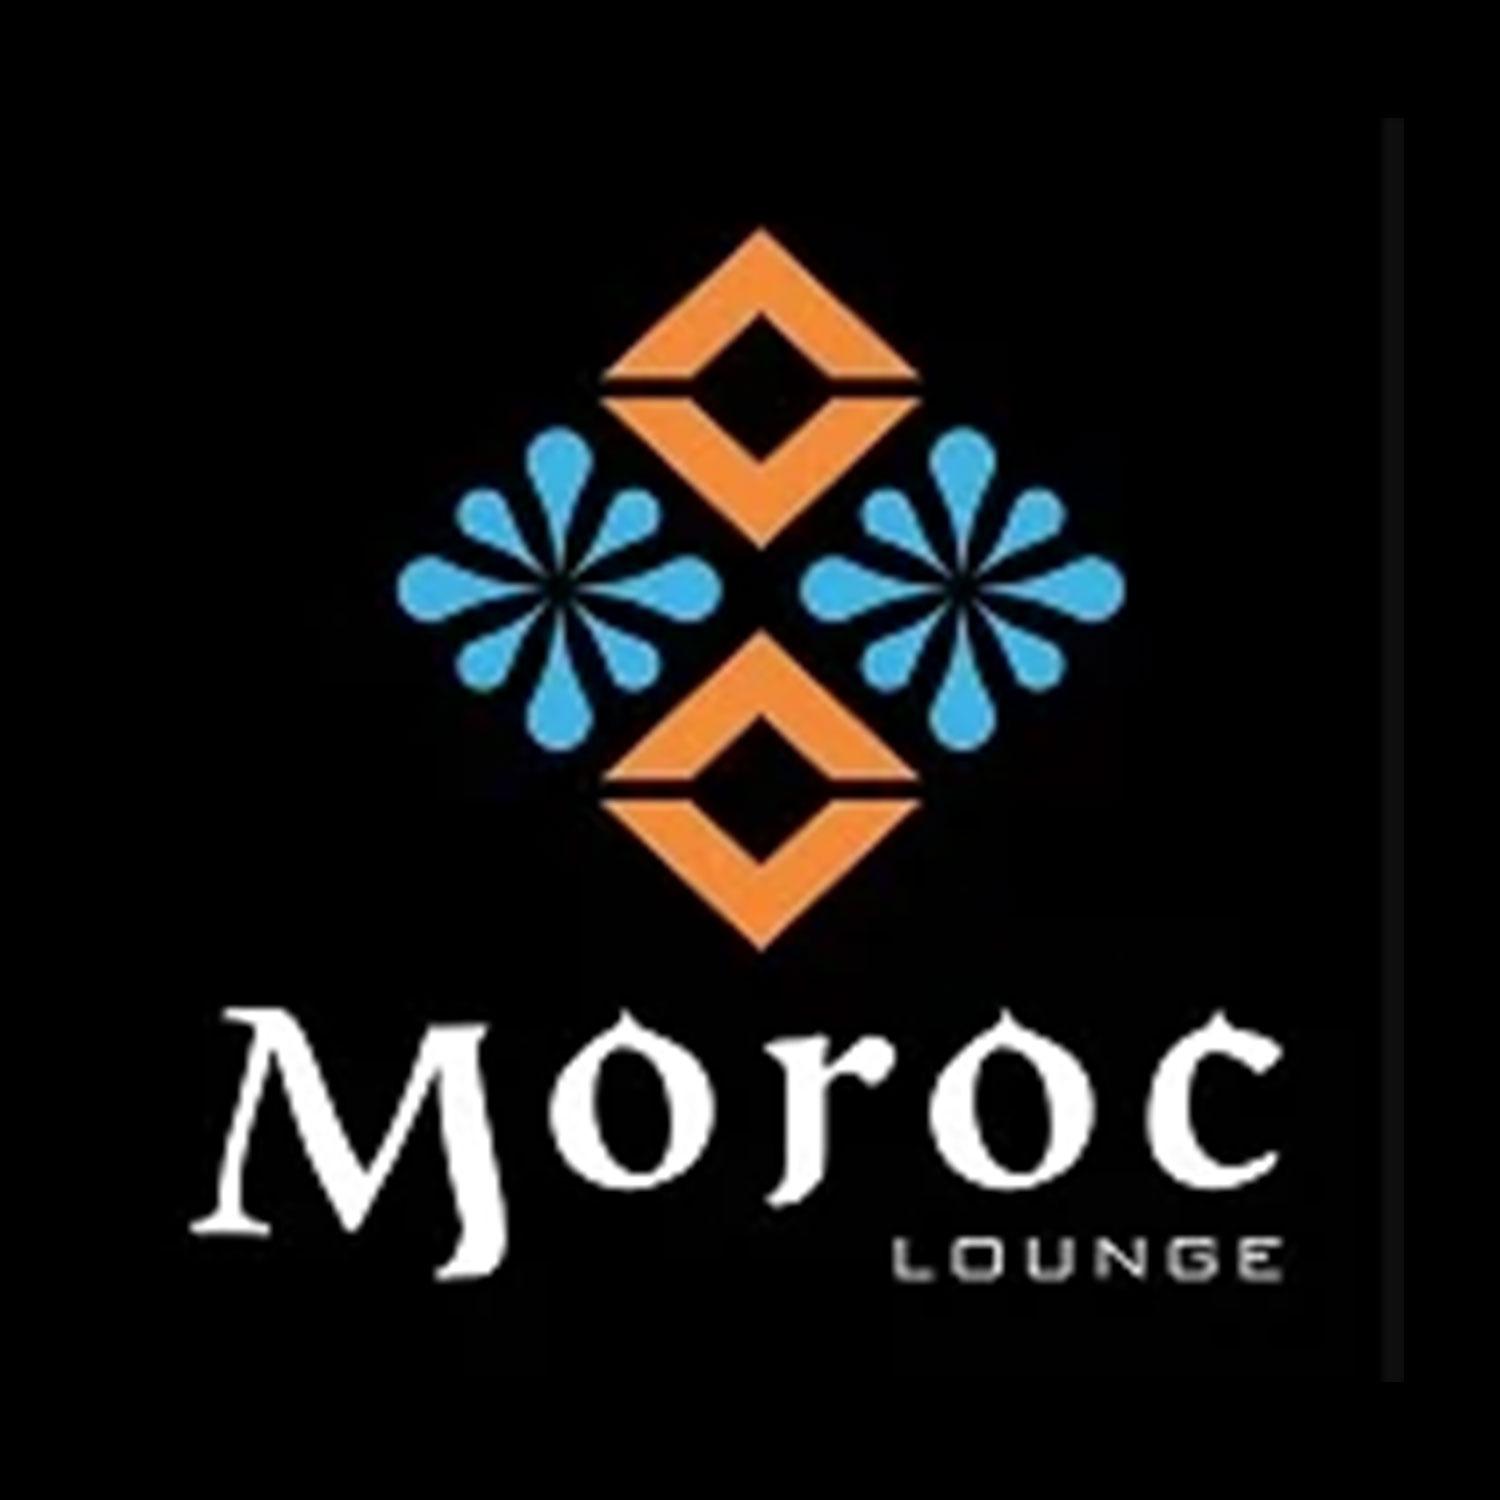 World Cup 2018 at Moroc Lounge & Bar